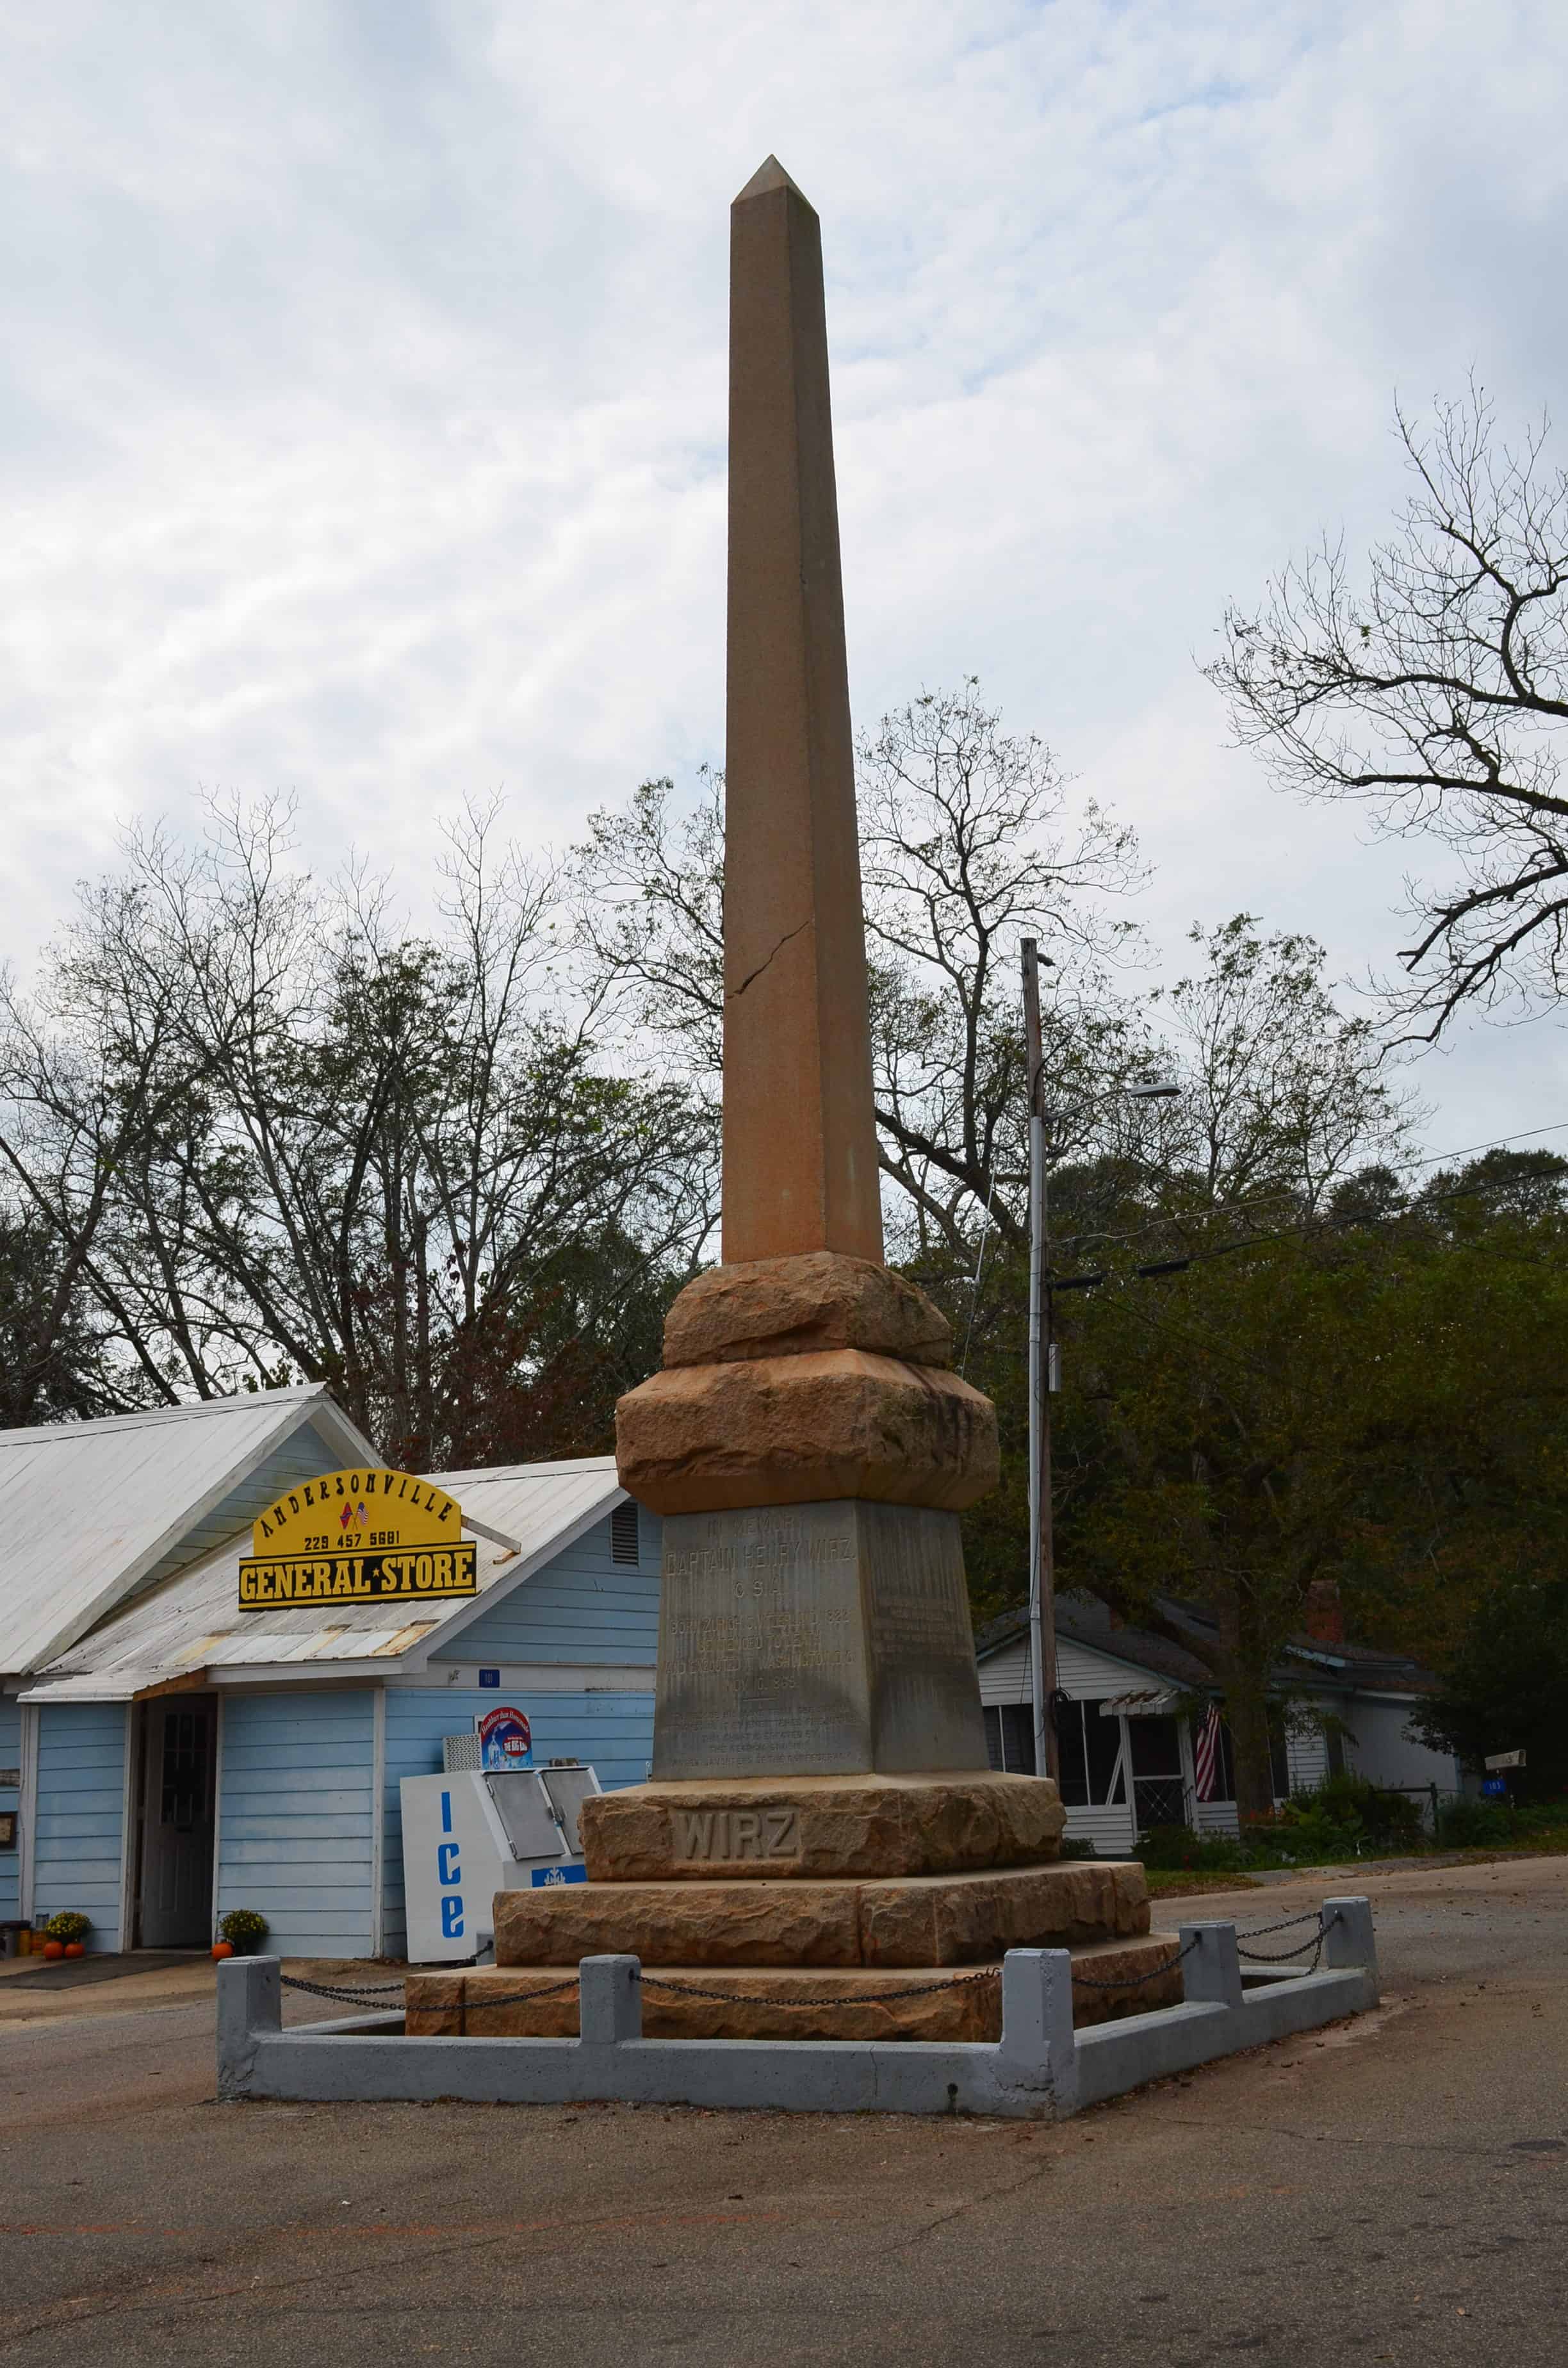 Wirz monument in Andersonville, Georgia